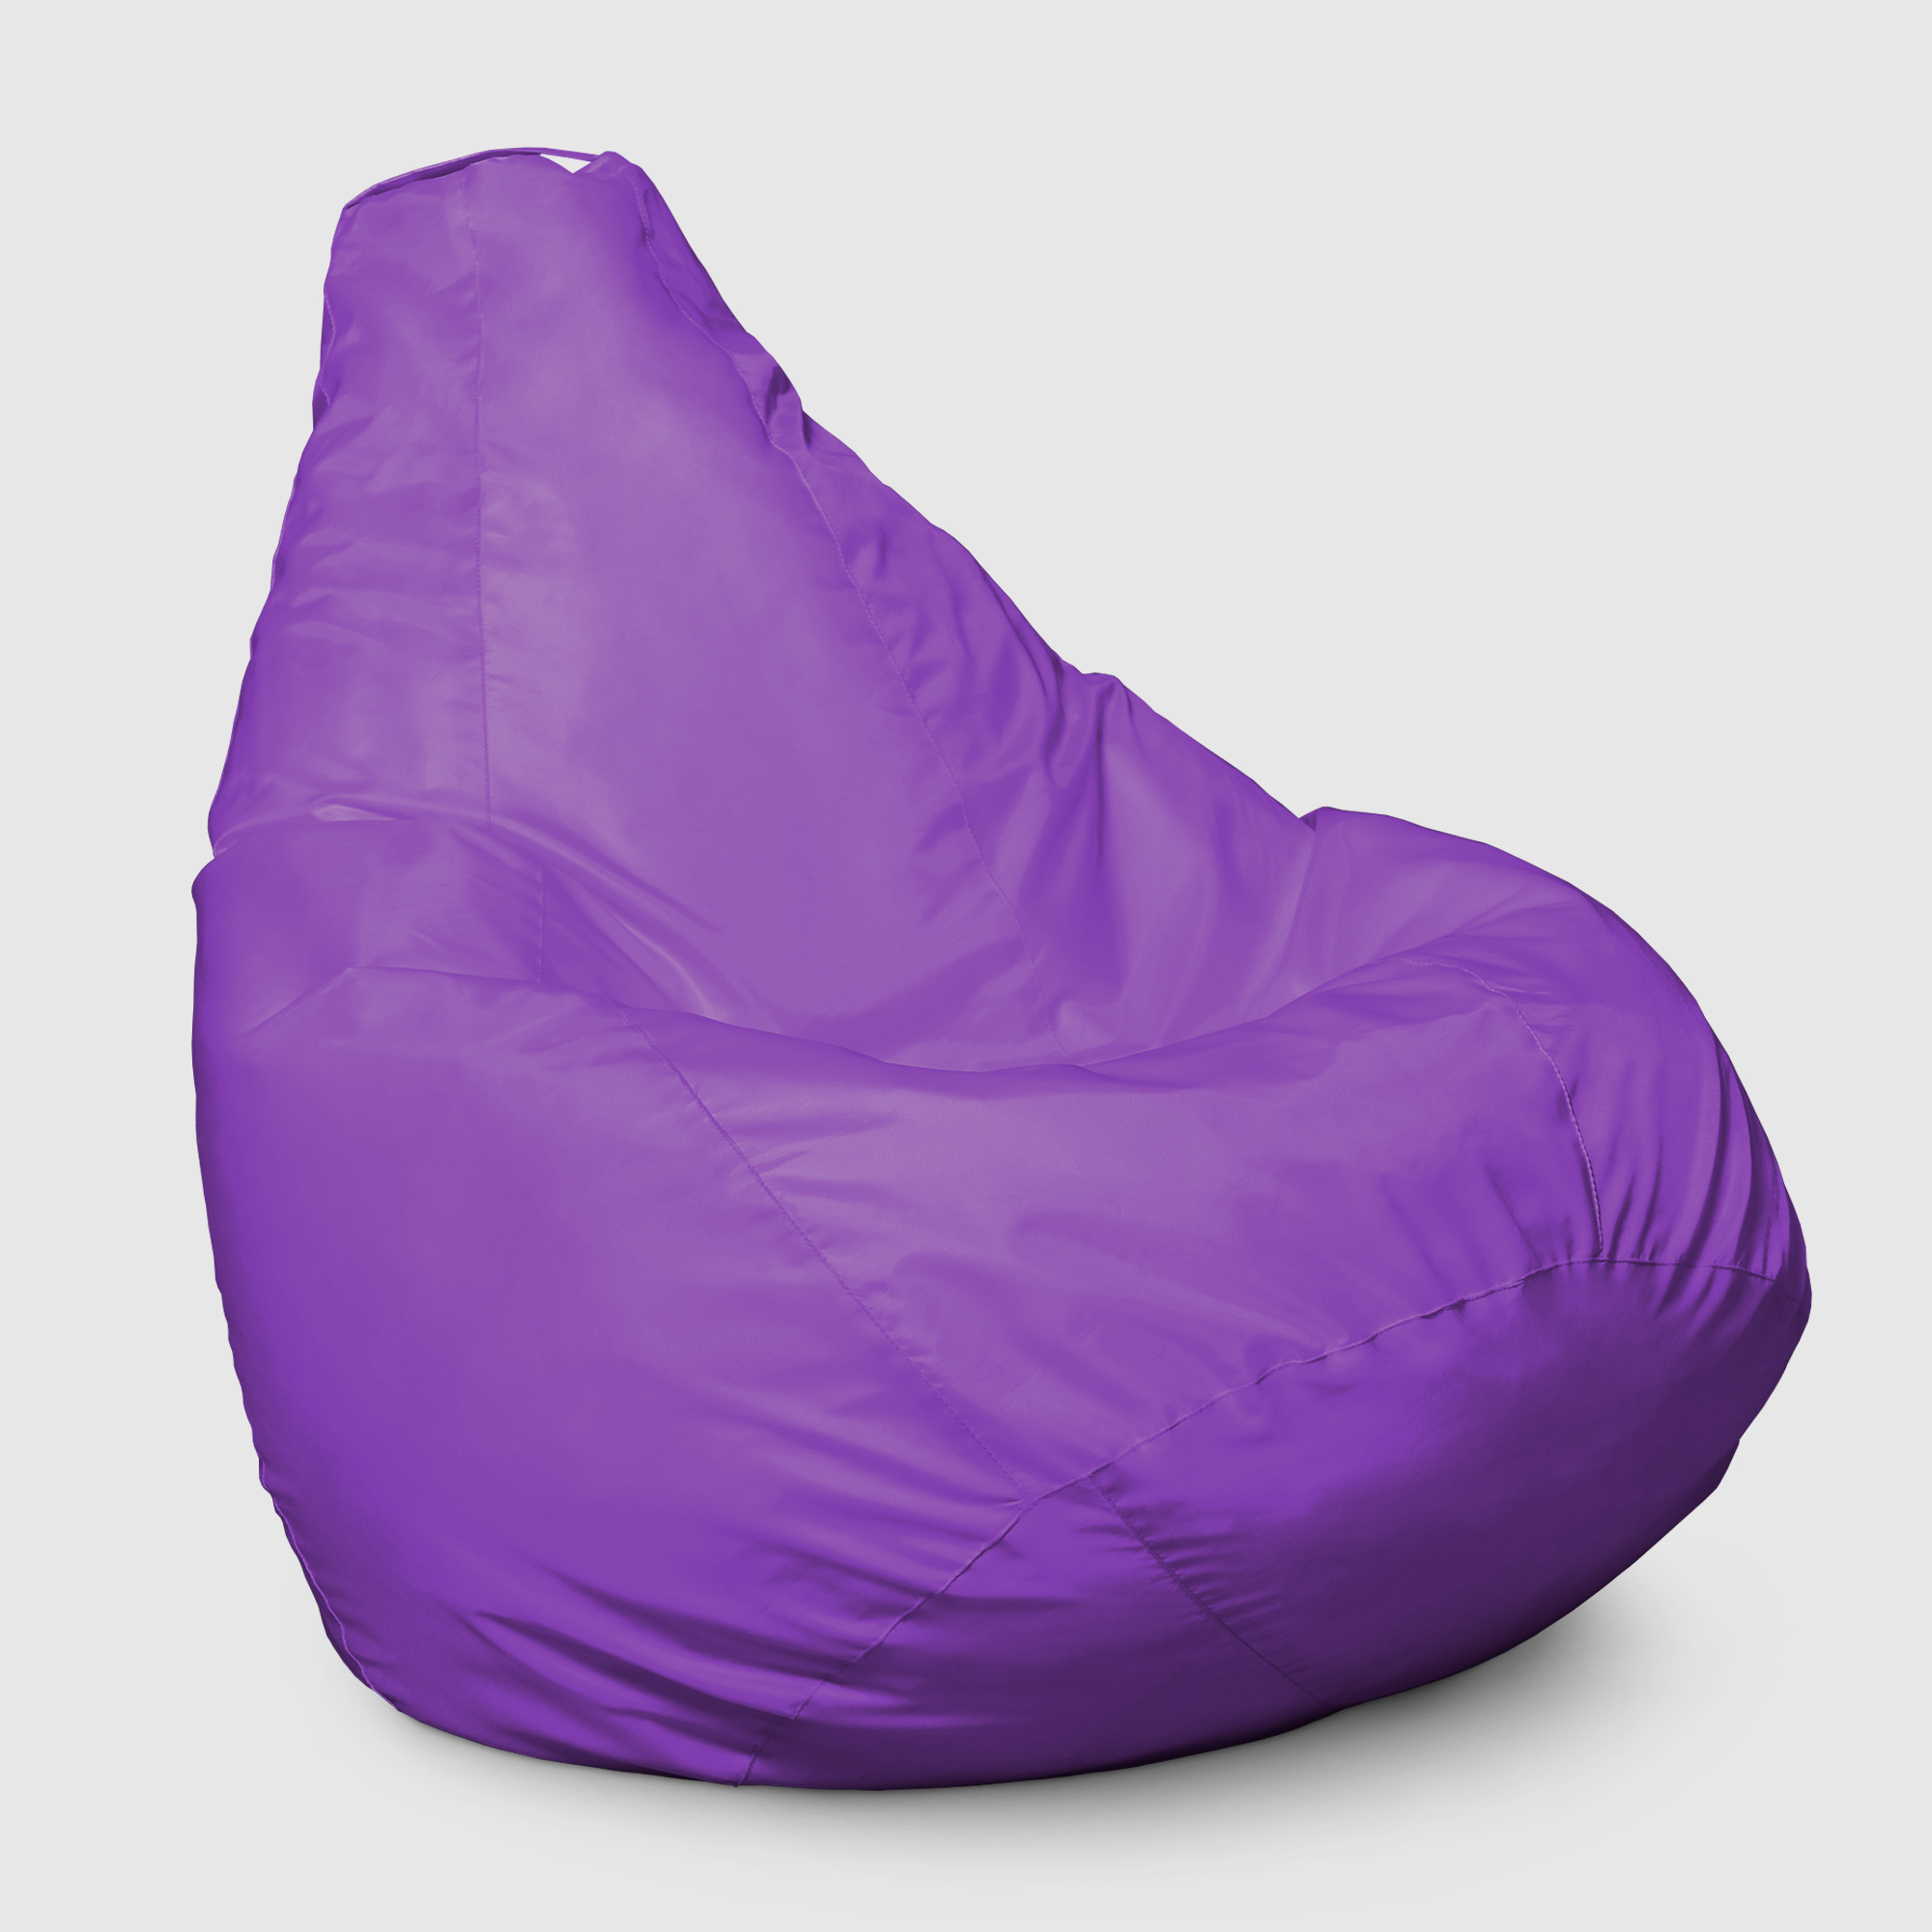 Кресло мешок Dreambag Меган xl фиолетовое 85х85х125 см кресло мешок dreambag меган xl розовое 85х85х125см